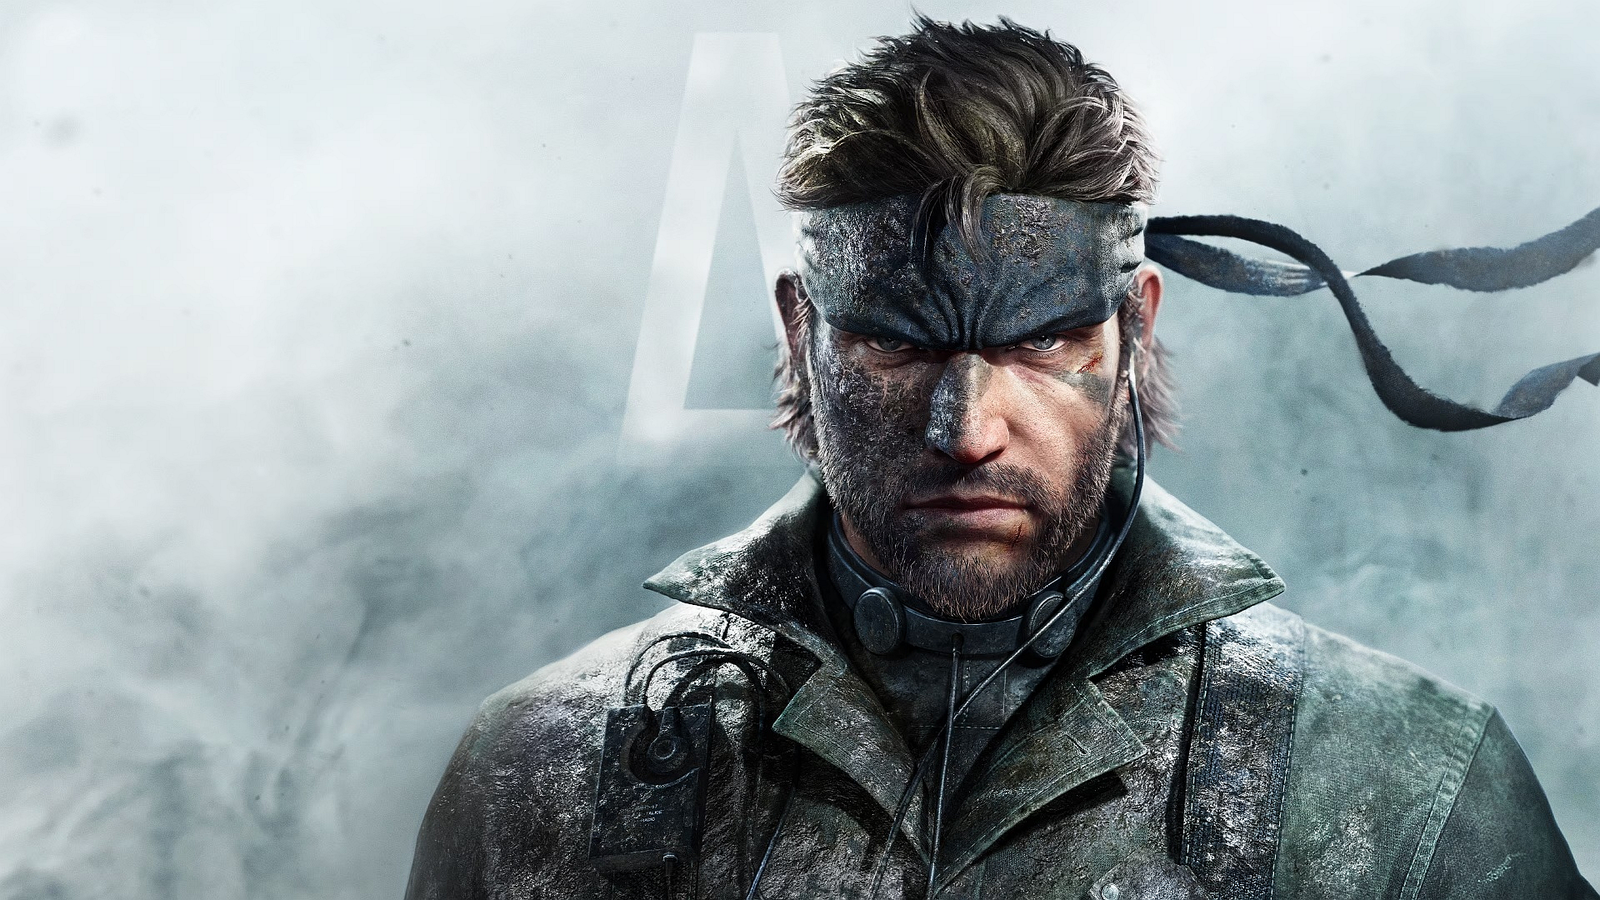 Metal Gear Solid 3 HD - Gameplay Walkthrough Part 1 - Snake Eater 